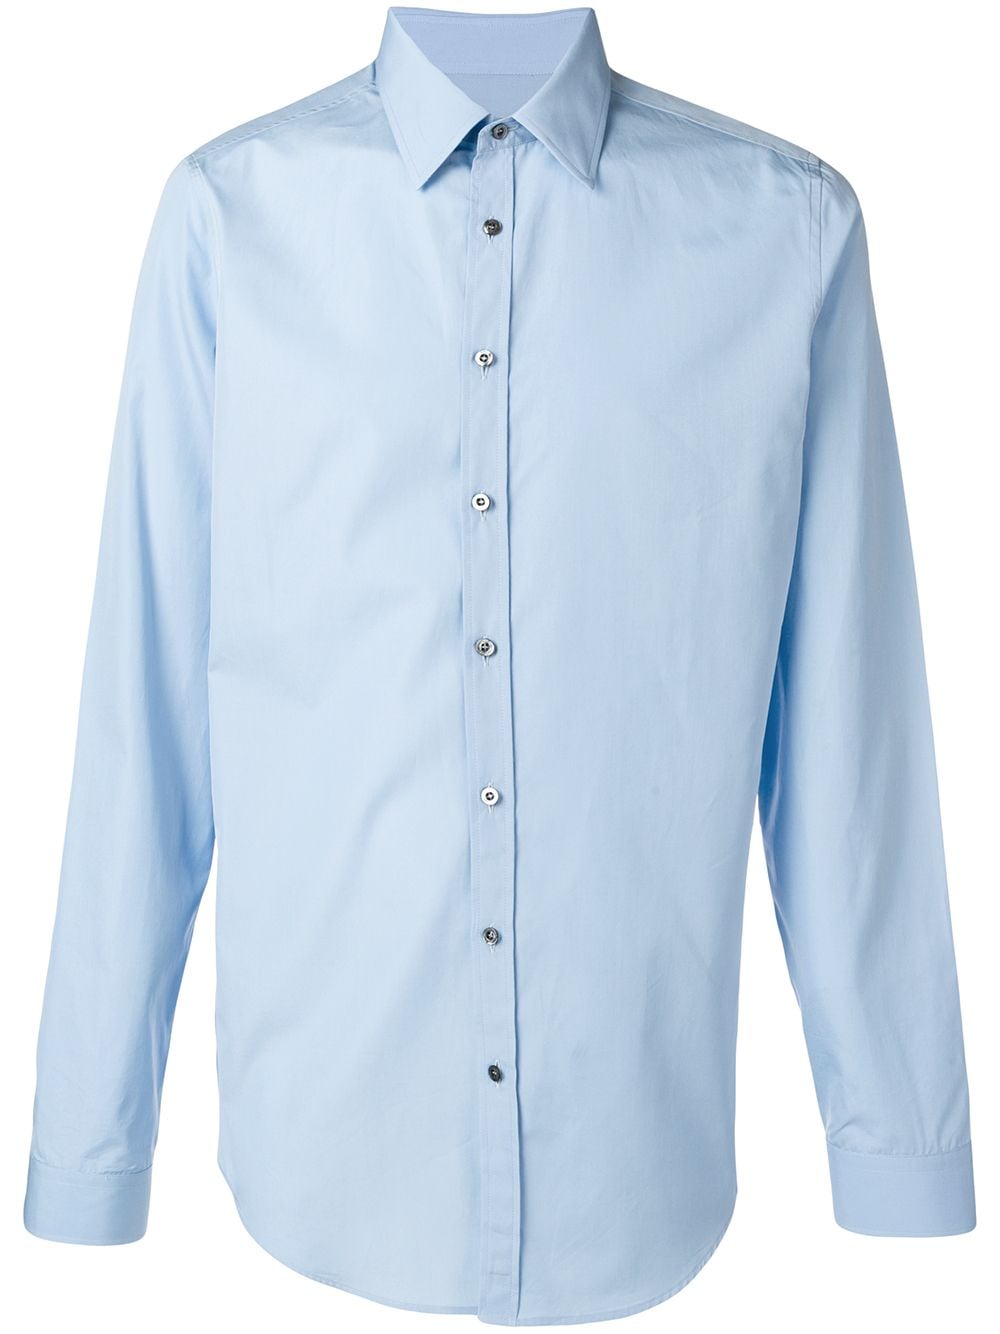 Shop blue Gucci classic formal shirt 